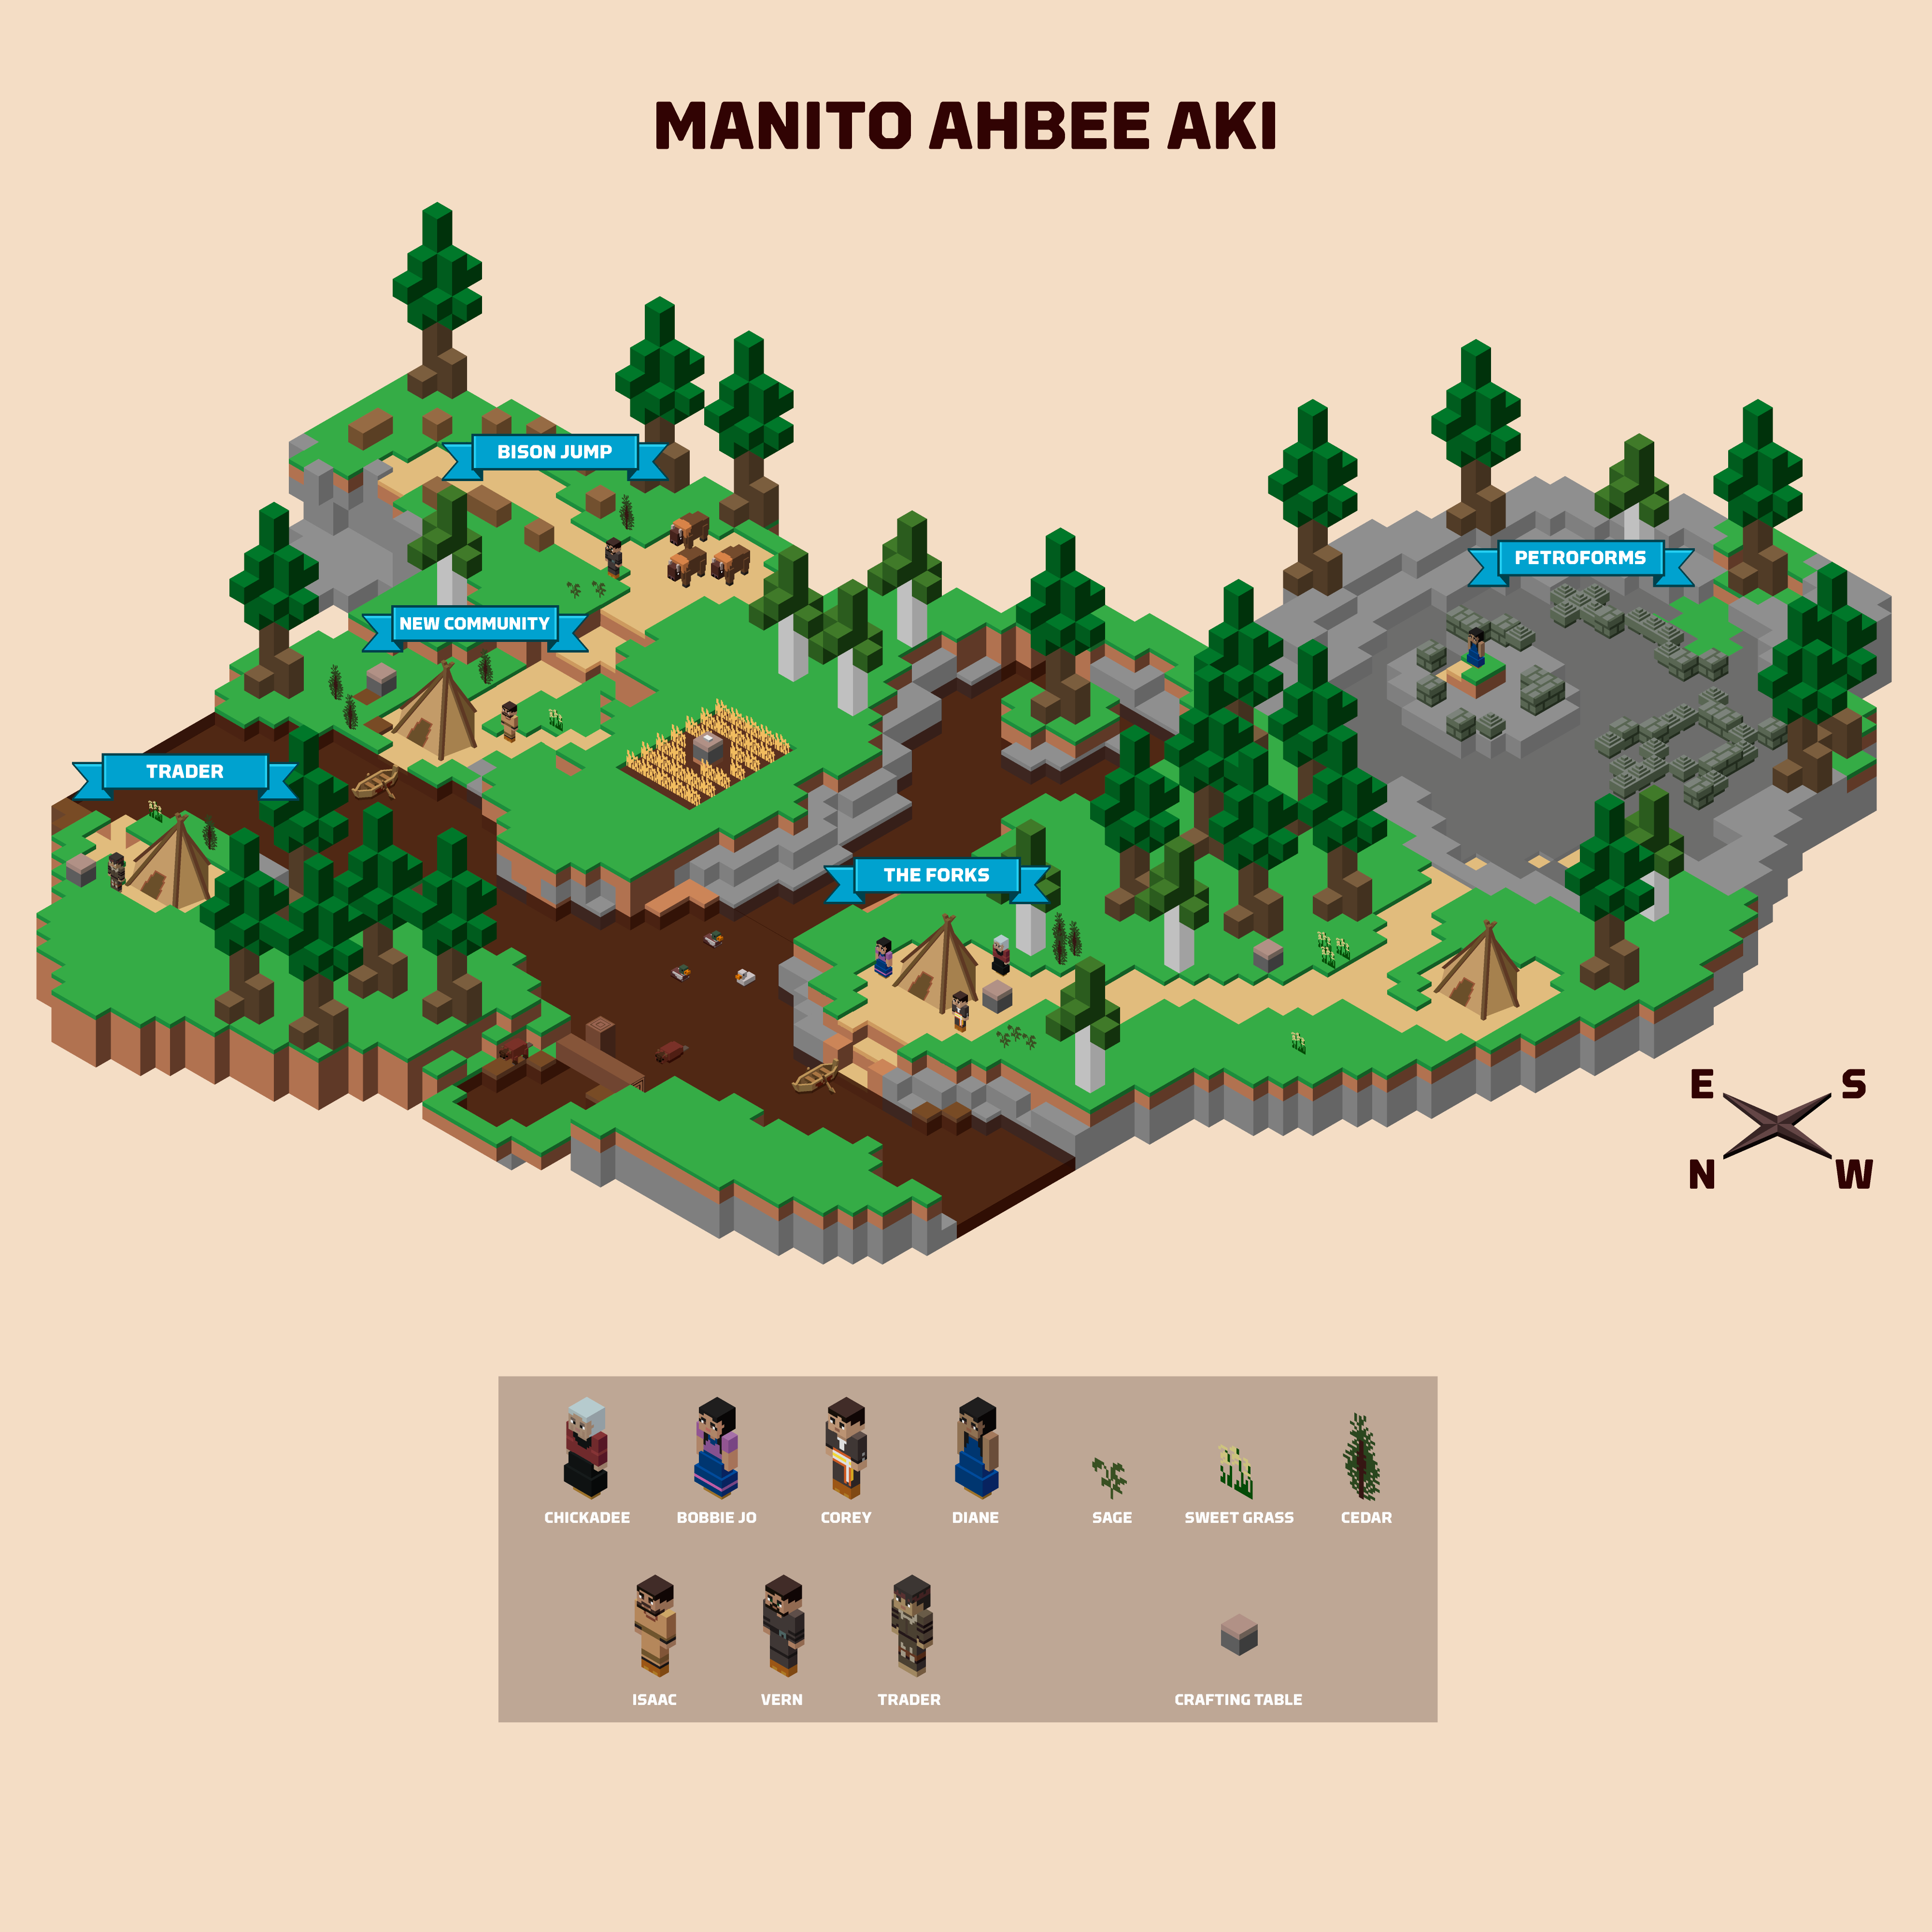 Printable world map for Manito Ahbee Aki